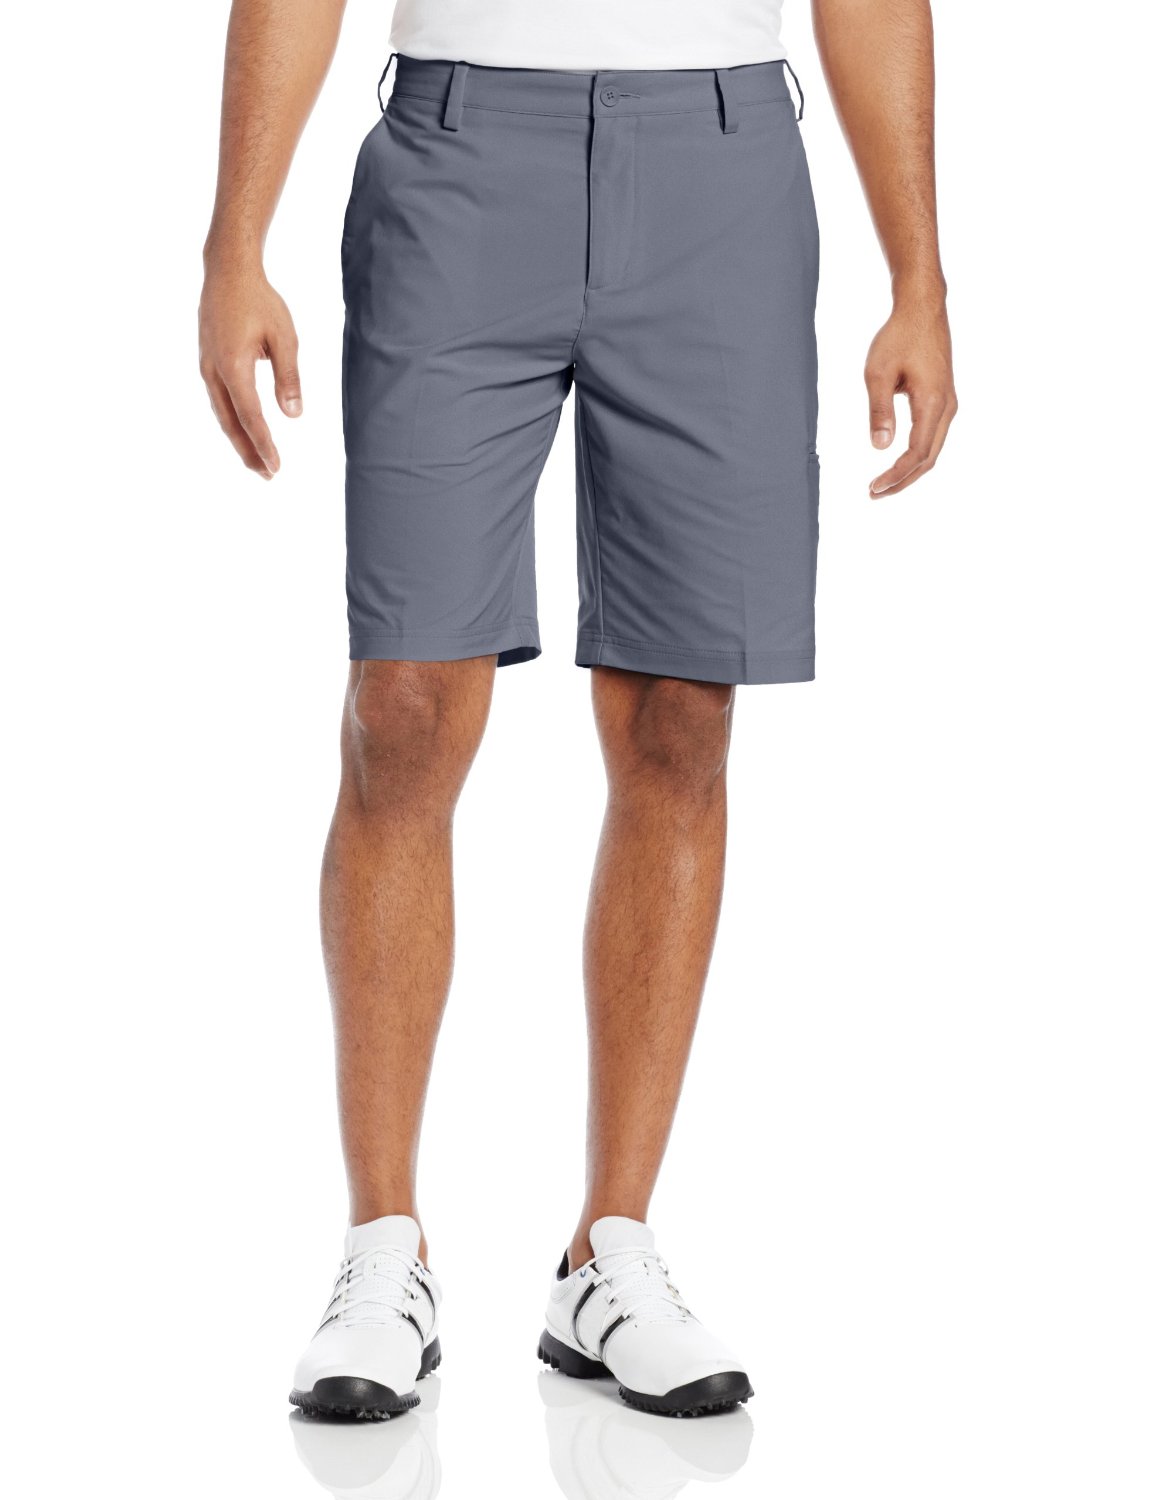 Adidas Mens Pocket Golf Shorts